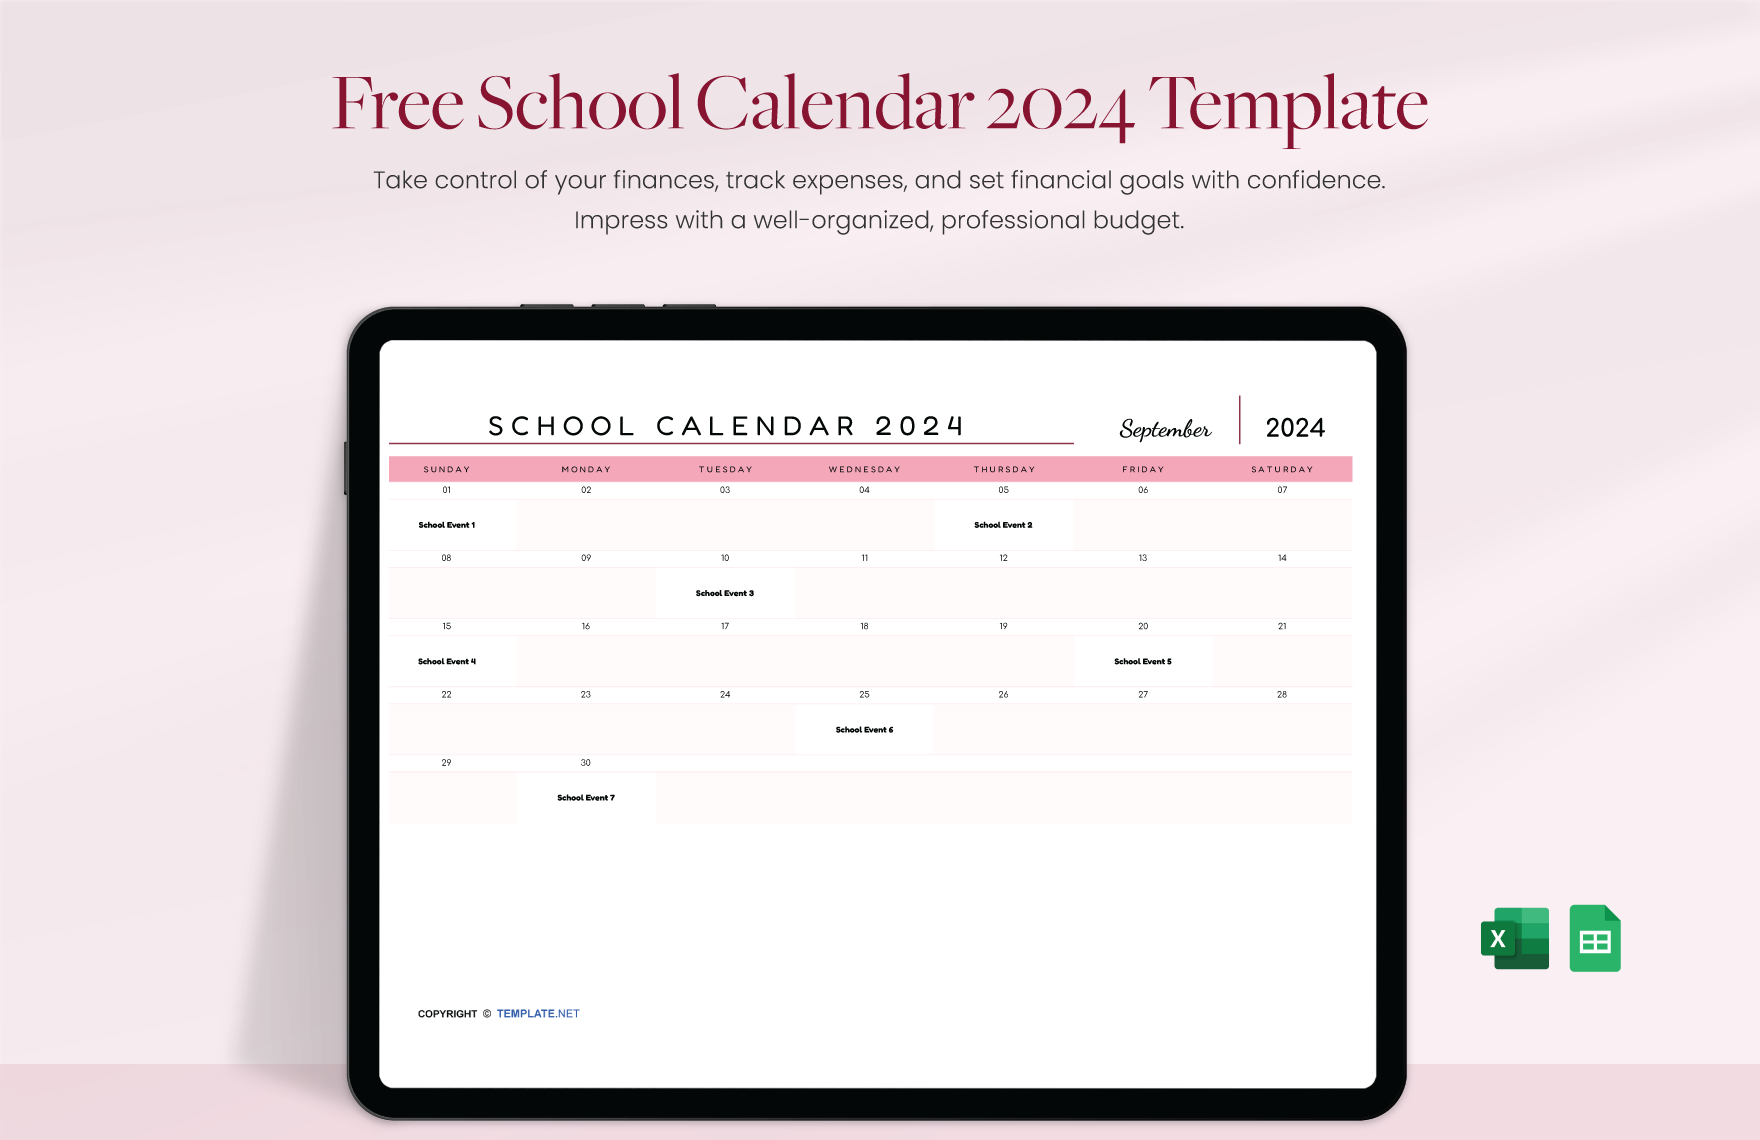 2024 Calendar Template in Excel - FREE Download | Template.net